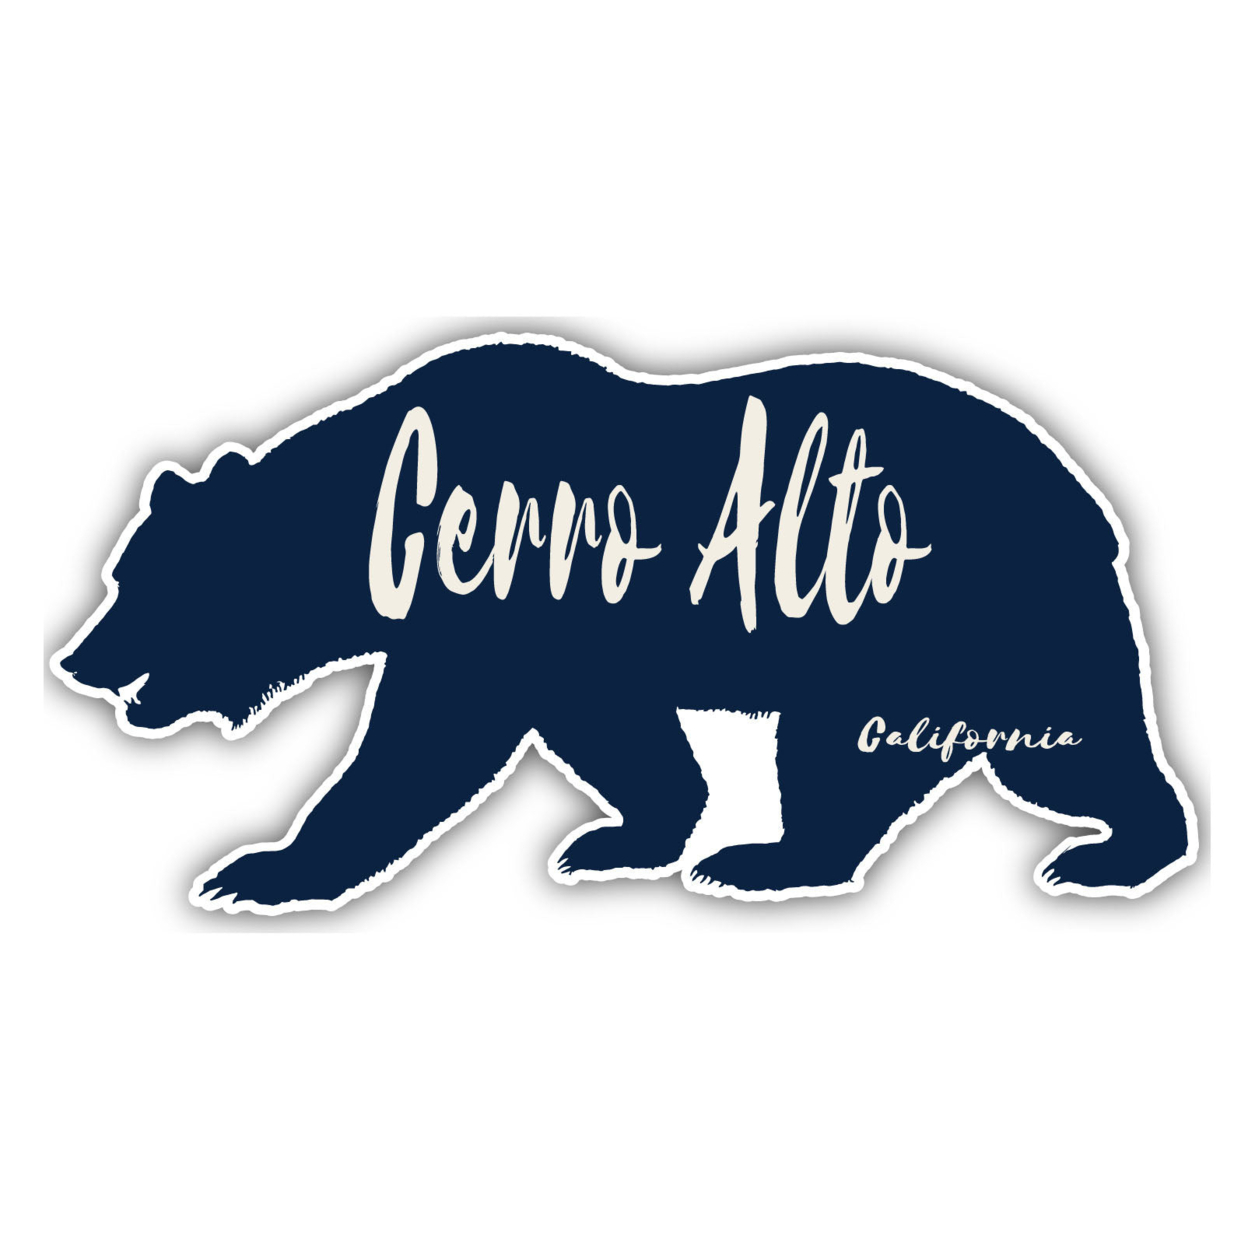 Cerro Alto California Souvenir Decorative Stickers (Choose Theme And Size) - 4-Pack, 8-Inch, Bear